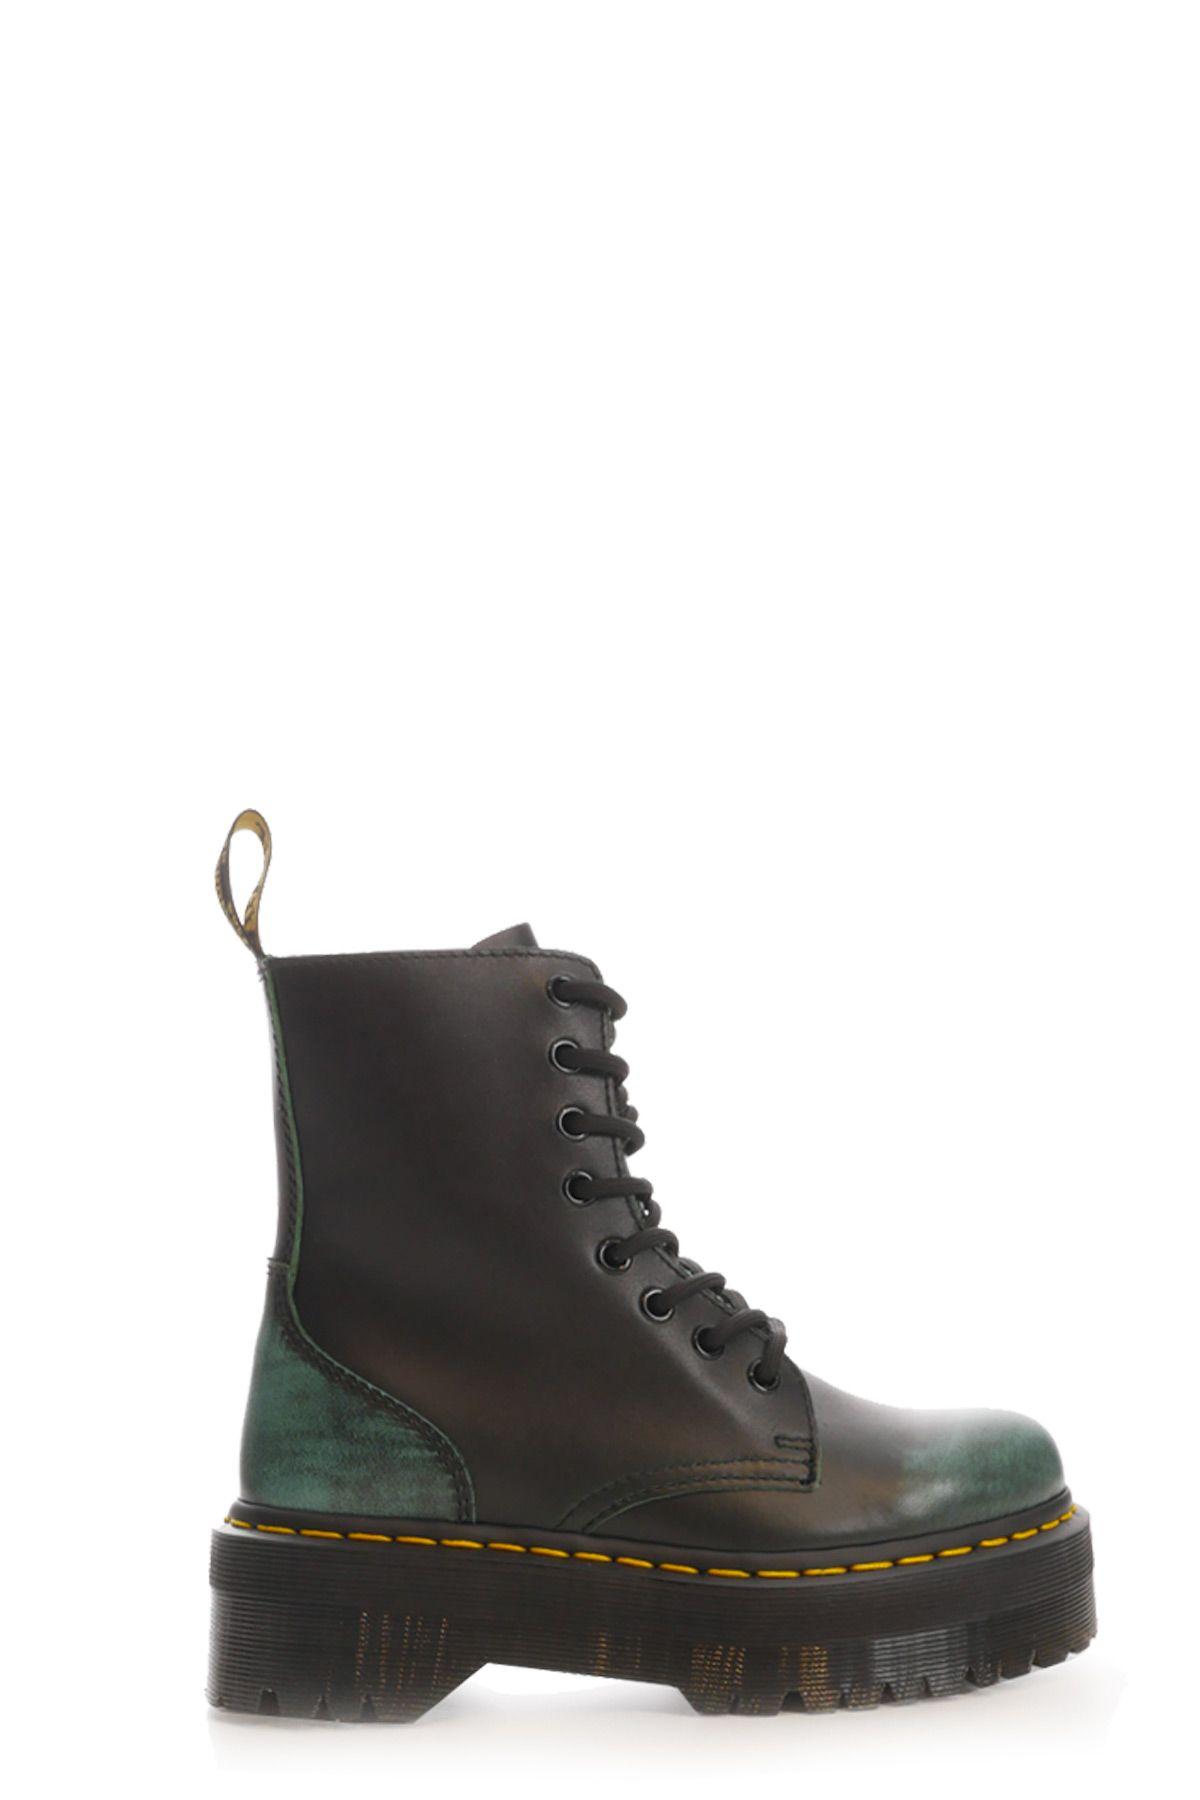 Dr. Martens Boots In Verde | ModeSens